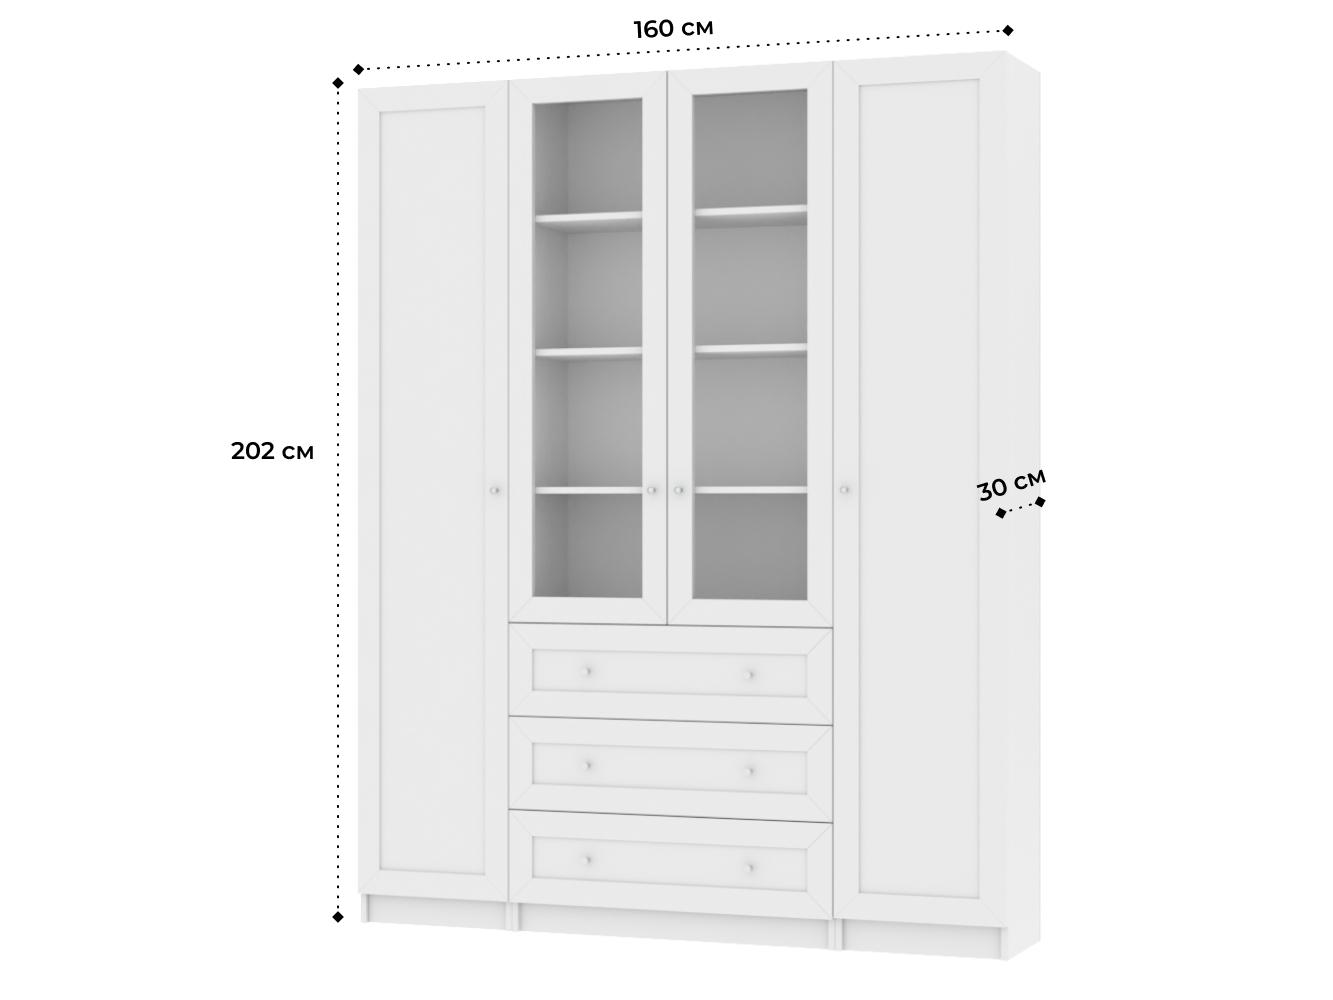  Книжный шкаф Билли 361 white ИКЕА (IKEA) изображение товара